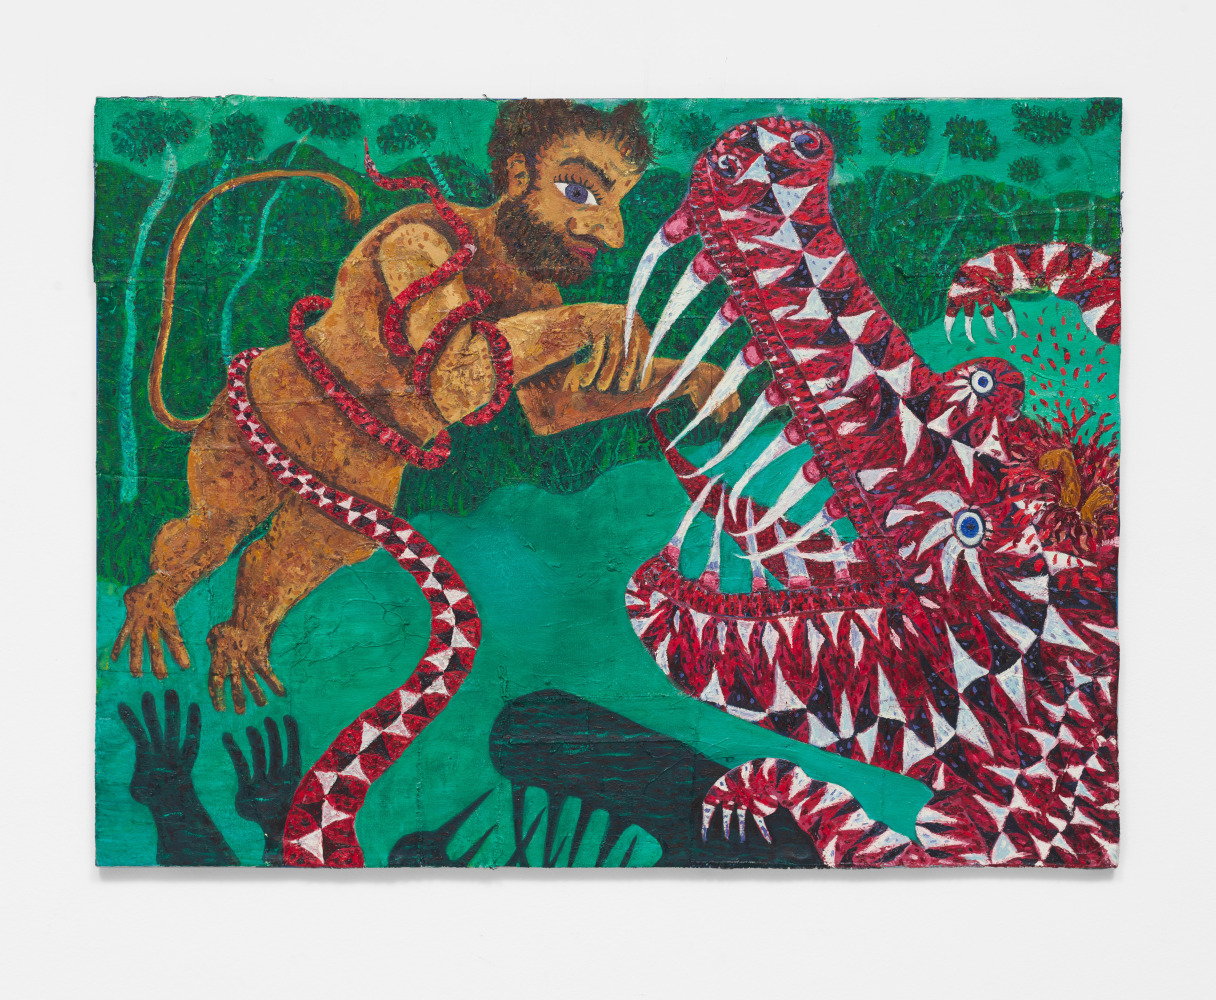 Mark Connolly
Hanuman fighting Sarusa, 2020
Oil on collaged canvas
36.22h x 48.03w in
92h x 122w cm